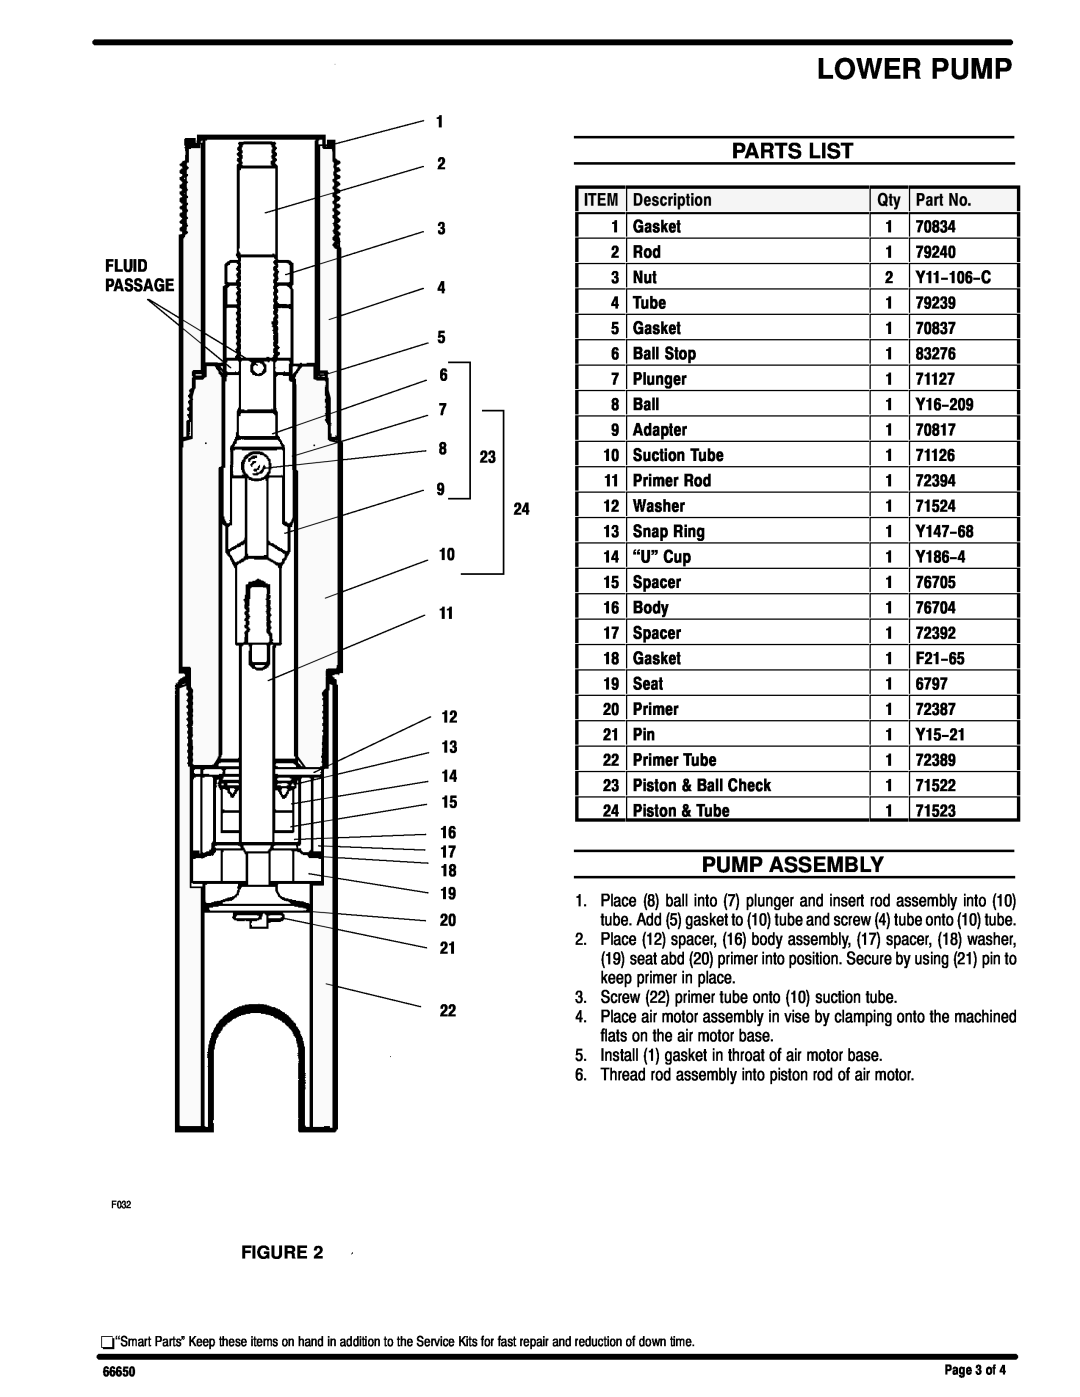 Ingersoll-Rand 66650 manual Parts List, Pump Assembly, Lower Pump 